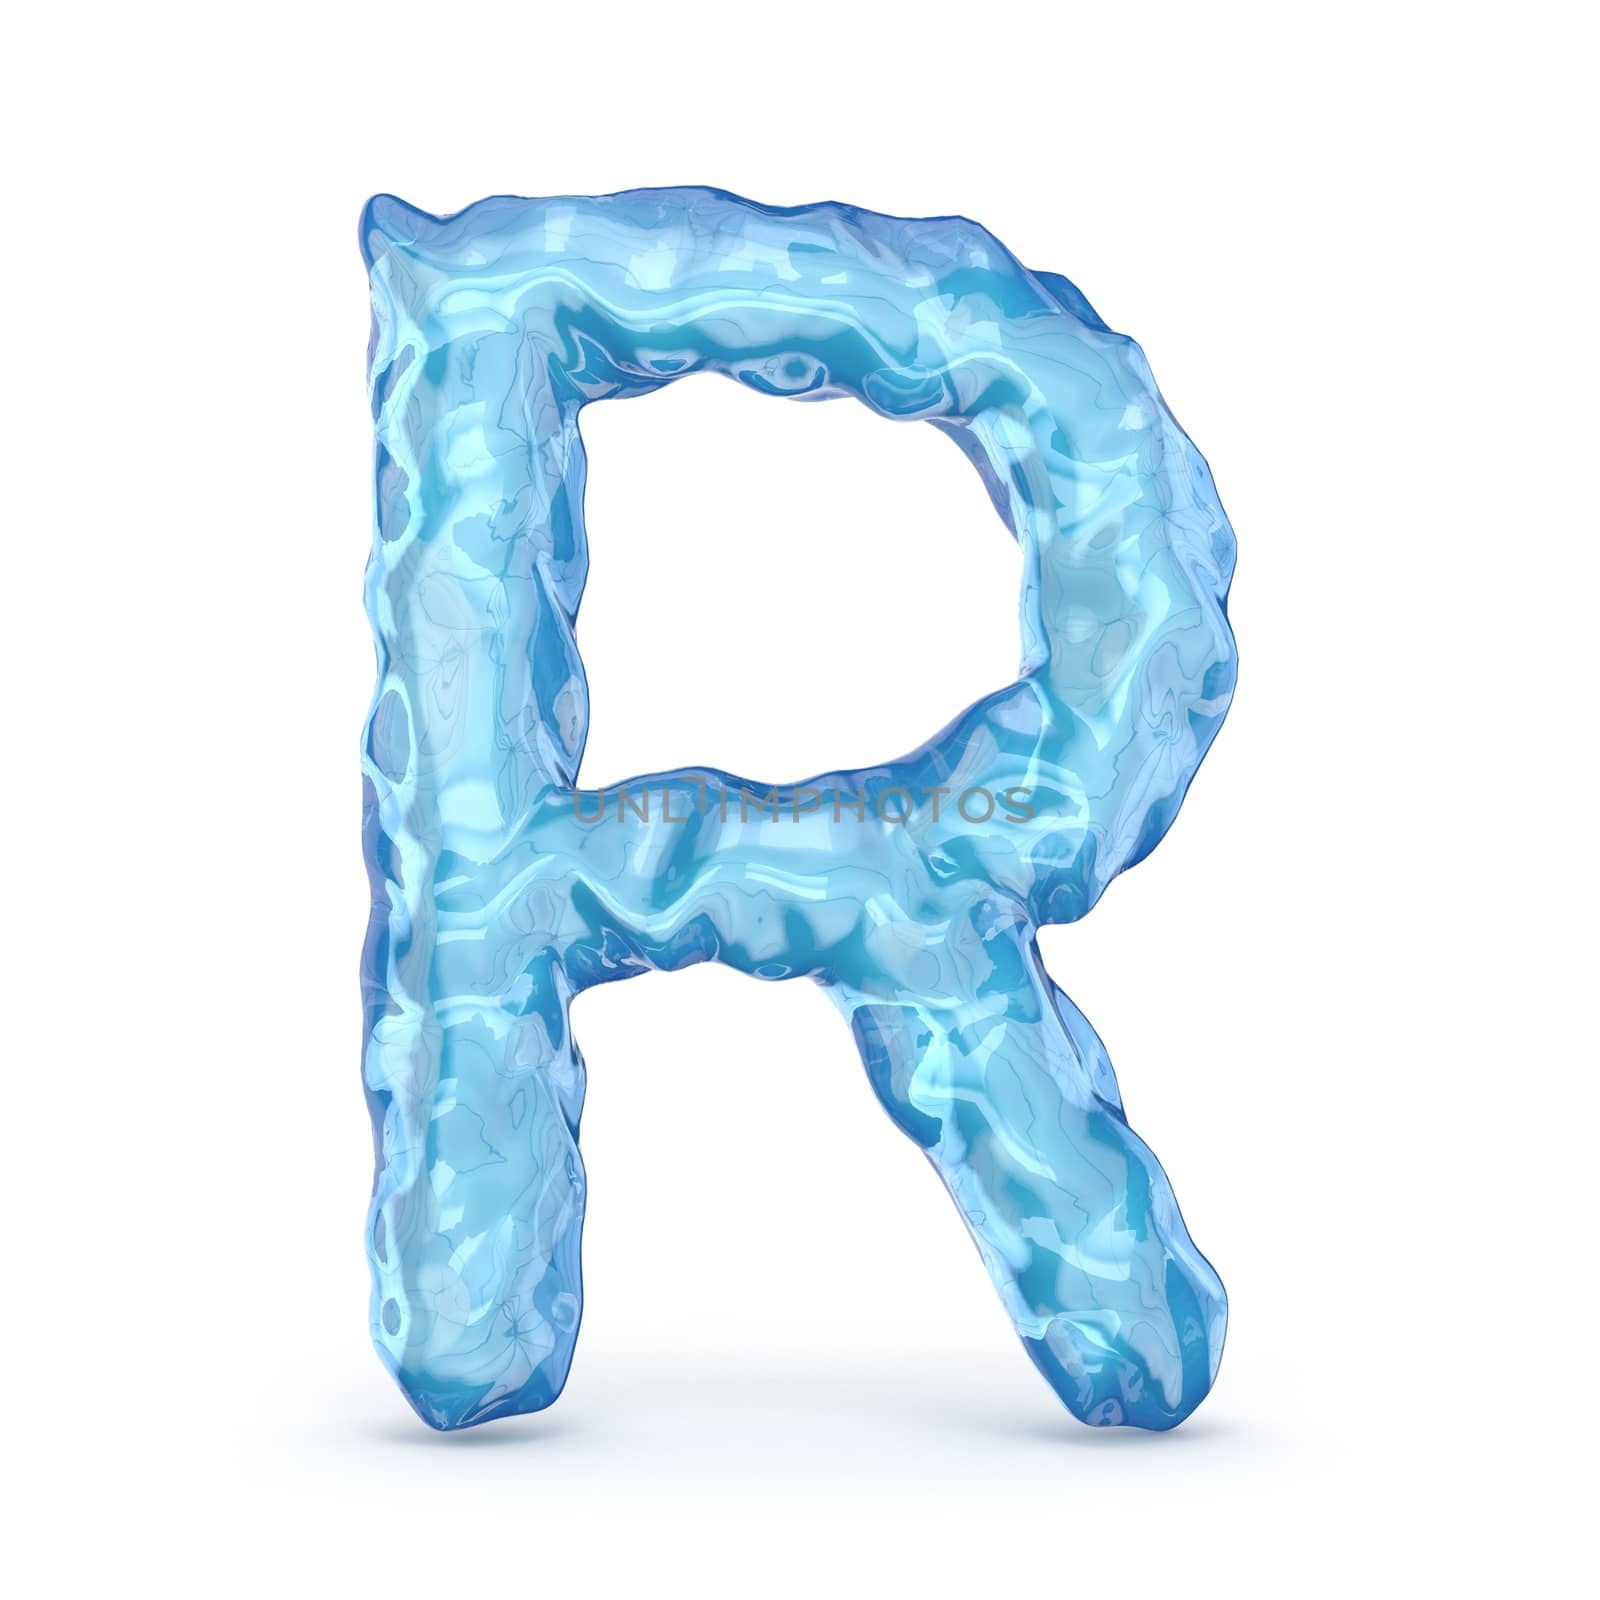 Ice font letter R 3D render illustration isolated on white background